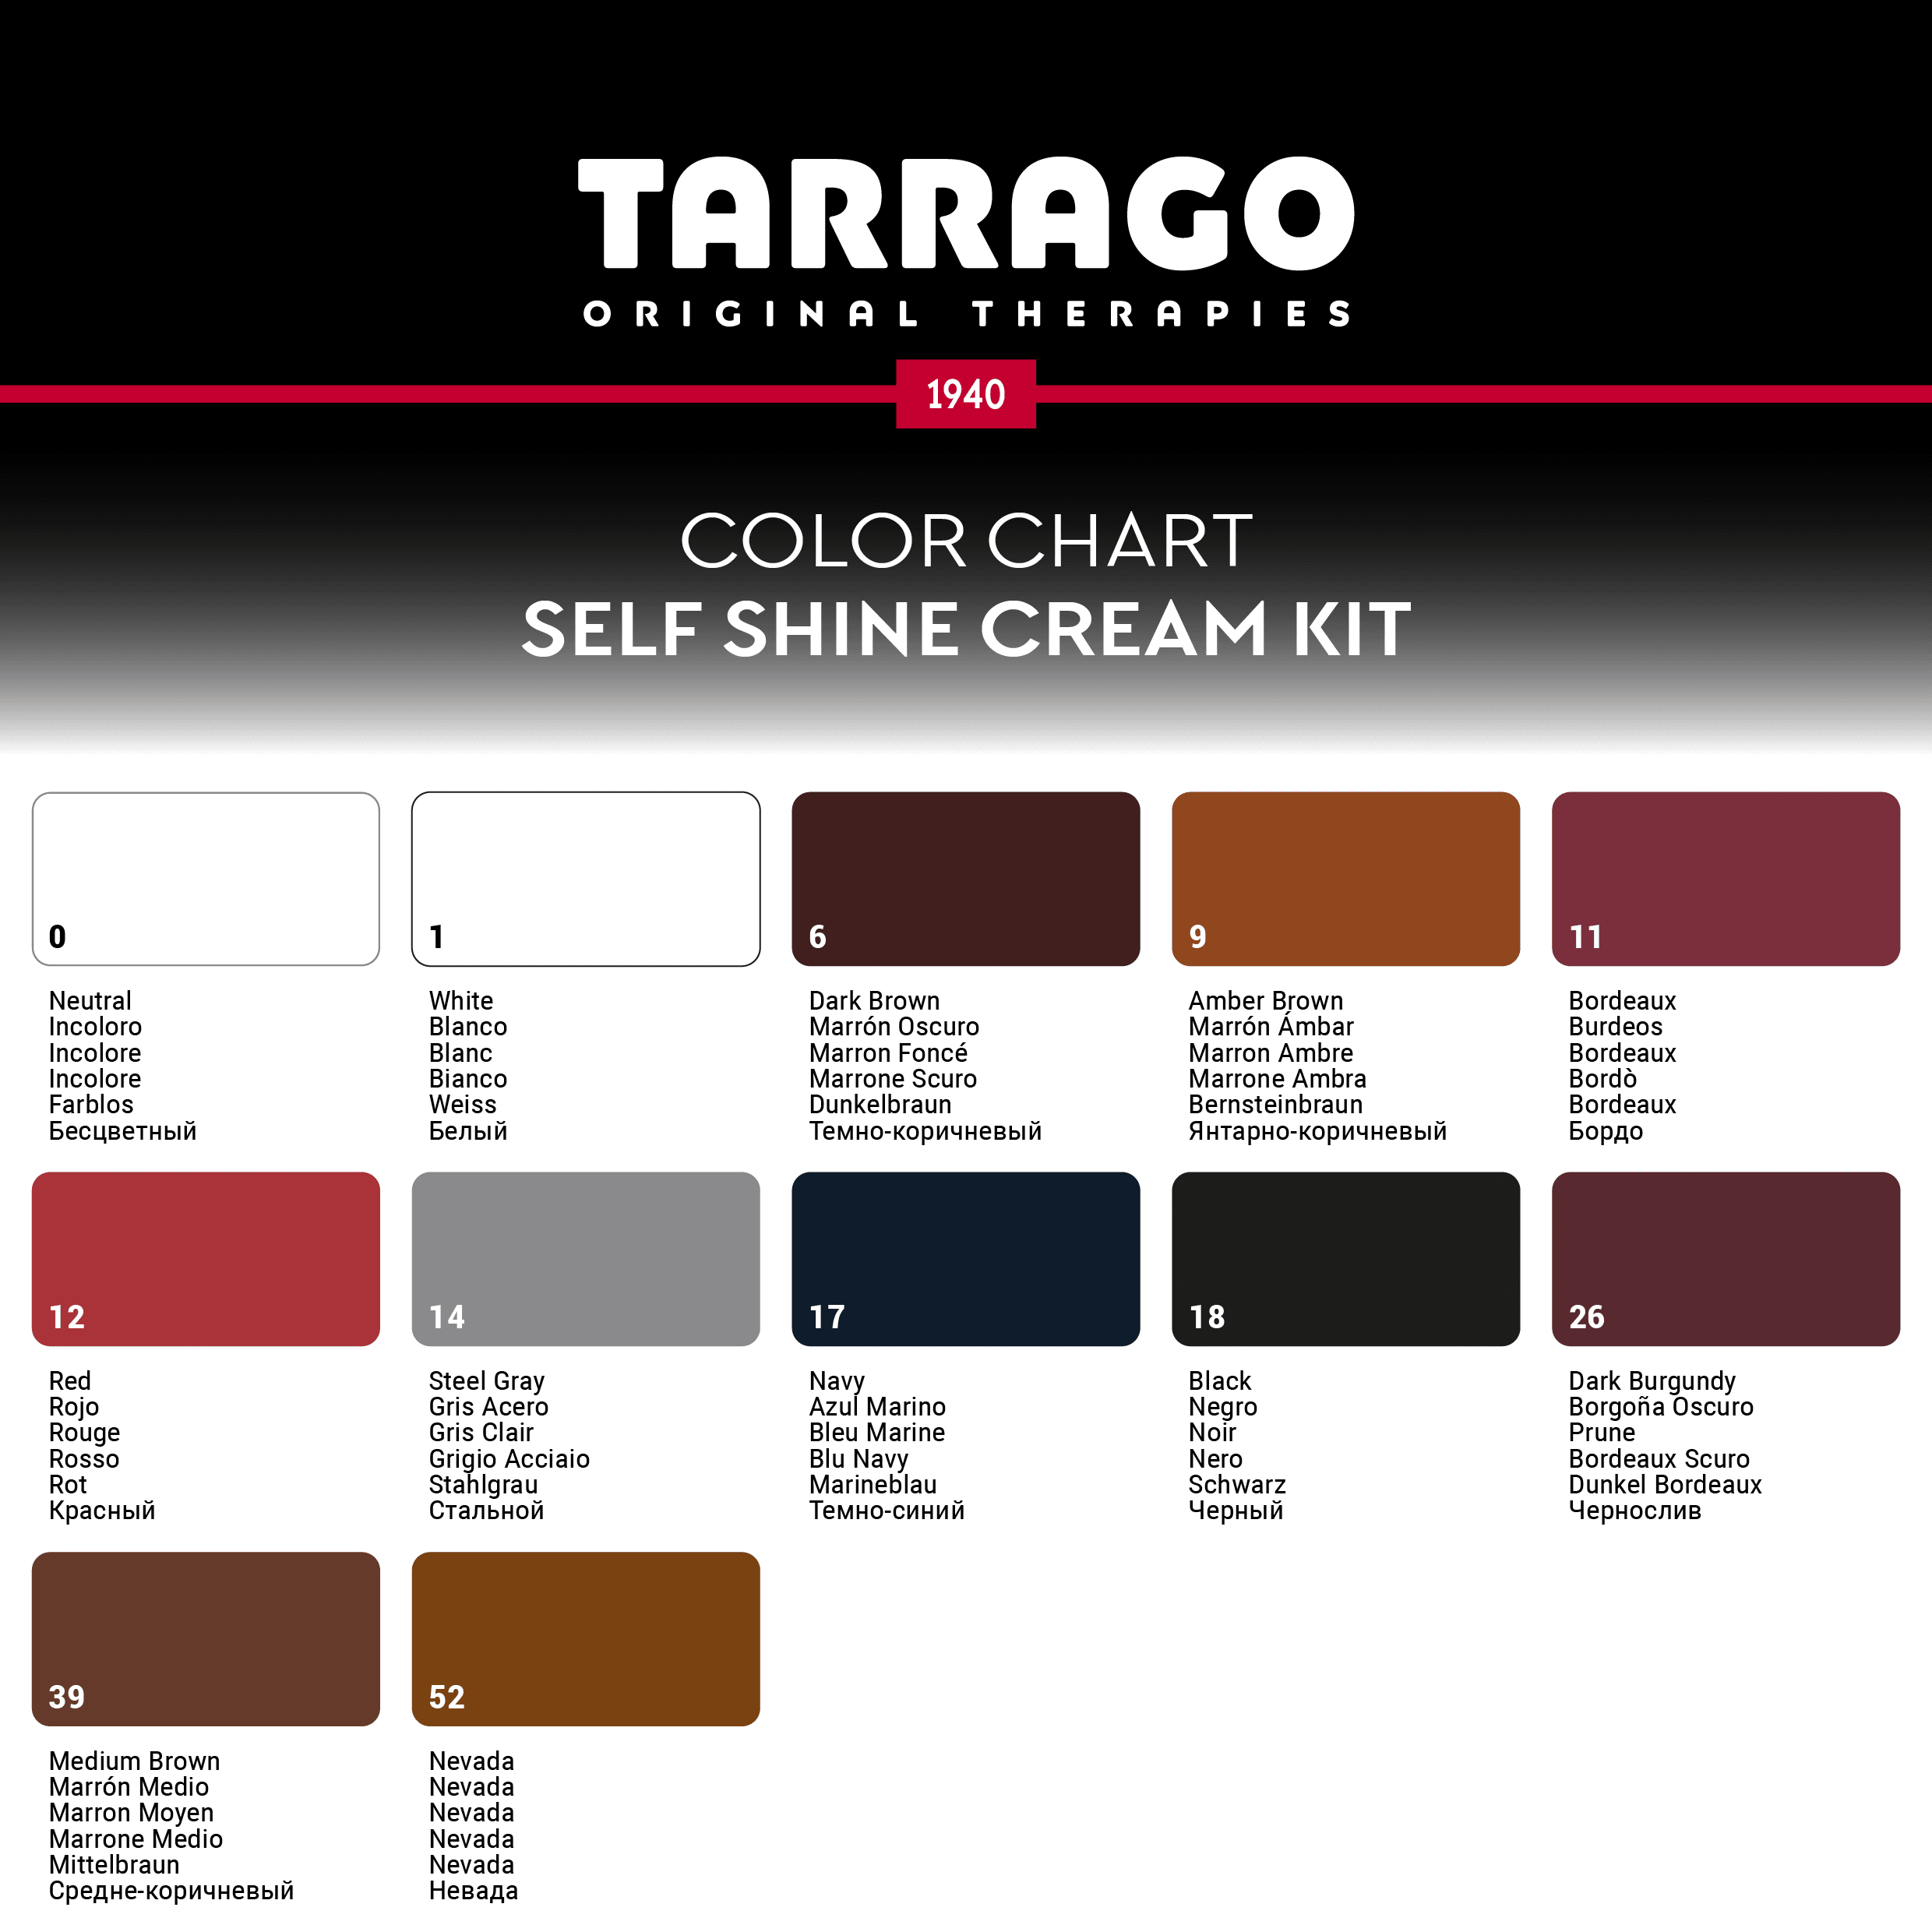 Tarrago Self Shine Cream Kit Color Chart